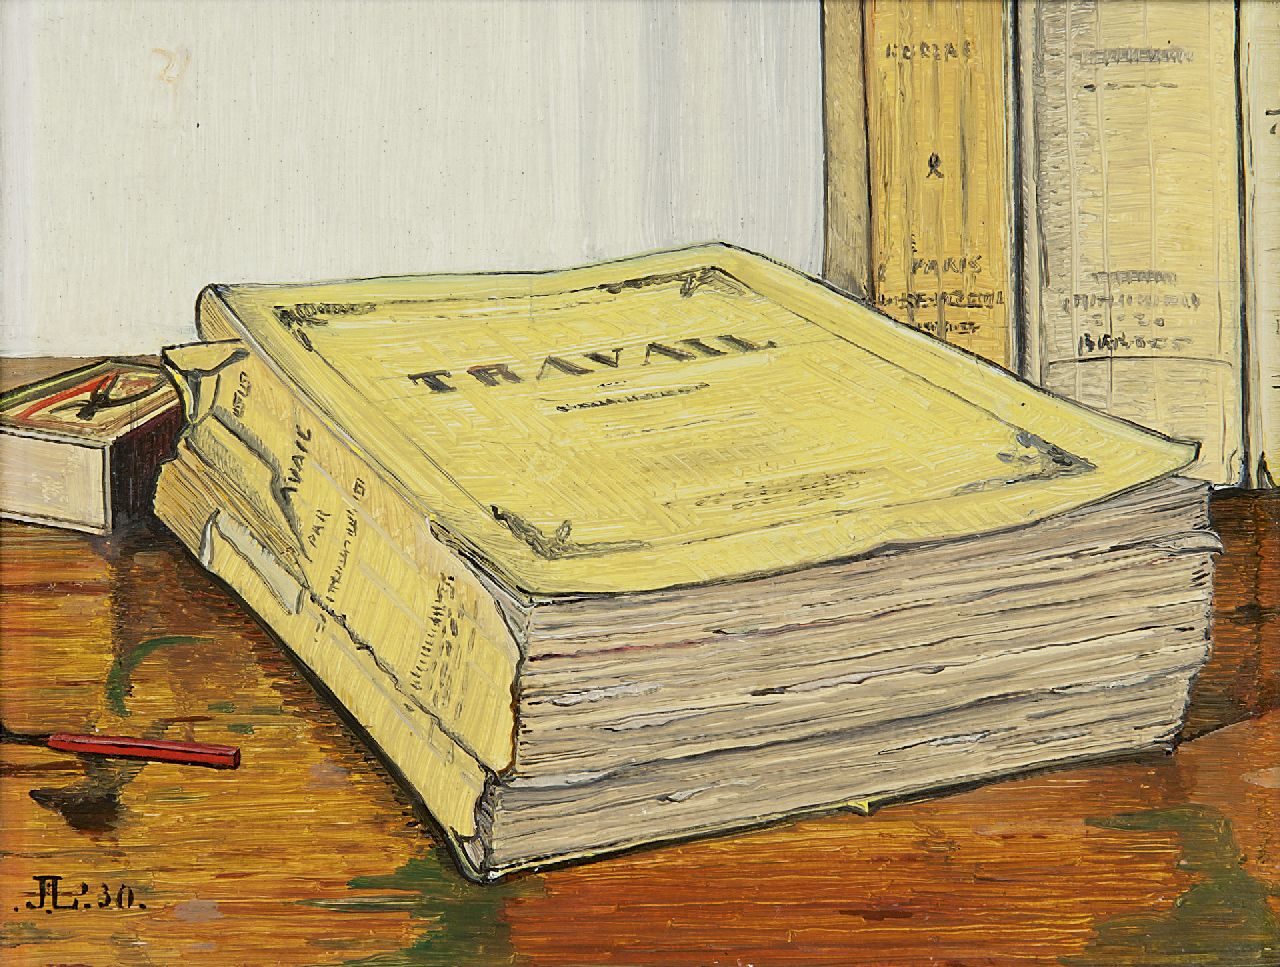 Lodeizen J.  | Johannes 'Jo' Lodeizen, A still life with the book 'Travail' by Emile Zola, Öl auf Holz 16,1 x 21,1 cm, signed l.l. with monogram und dated ' 30